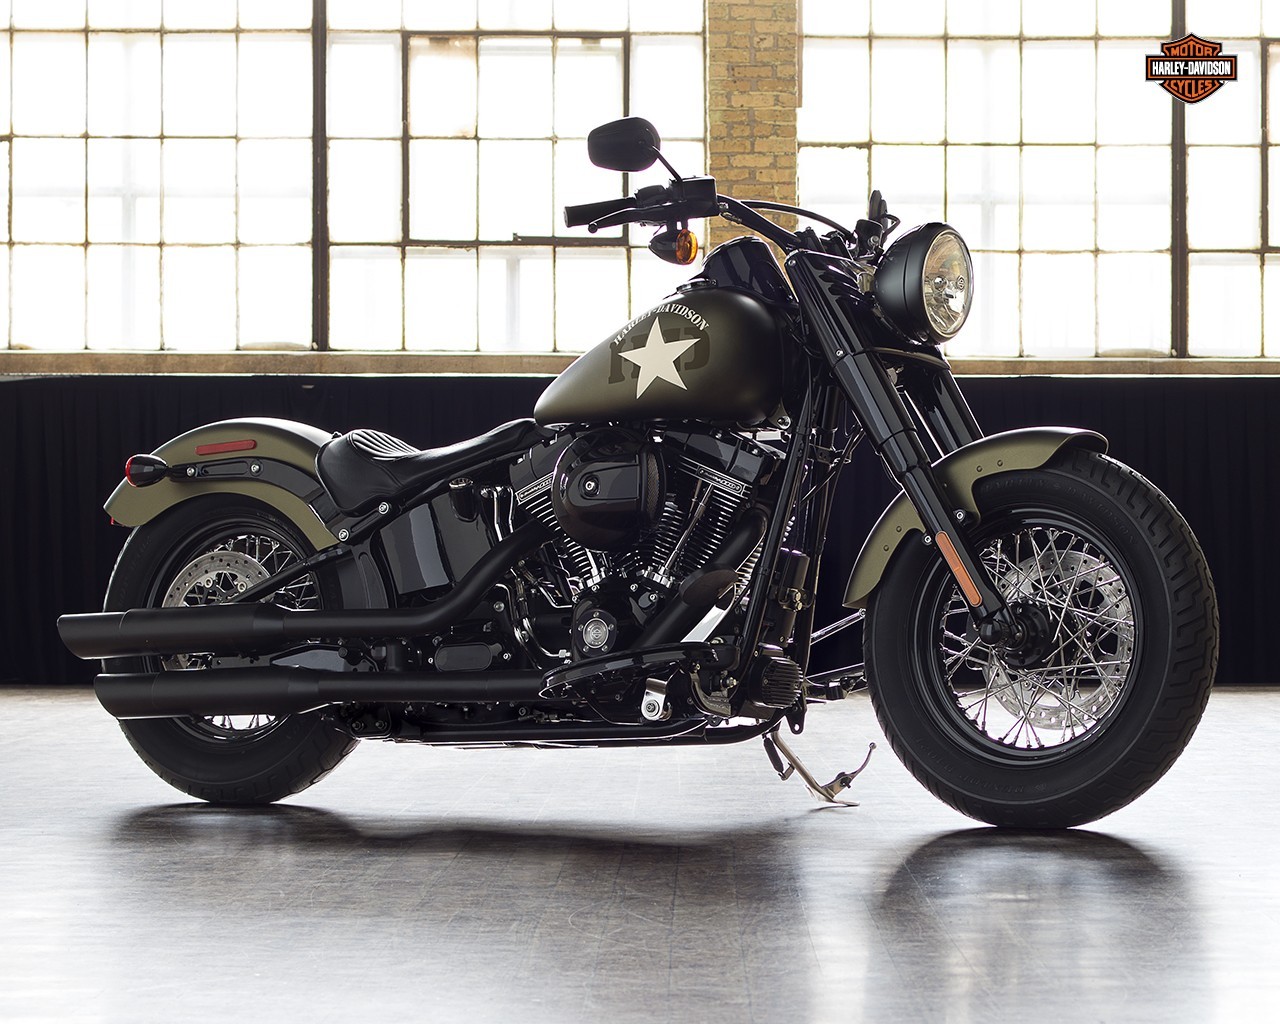 Harley Davidson Softail Slim S 2016 Military Edition For Sale Off 60 Medpharmres Com